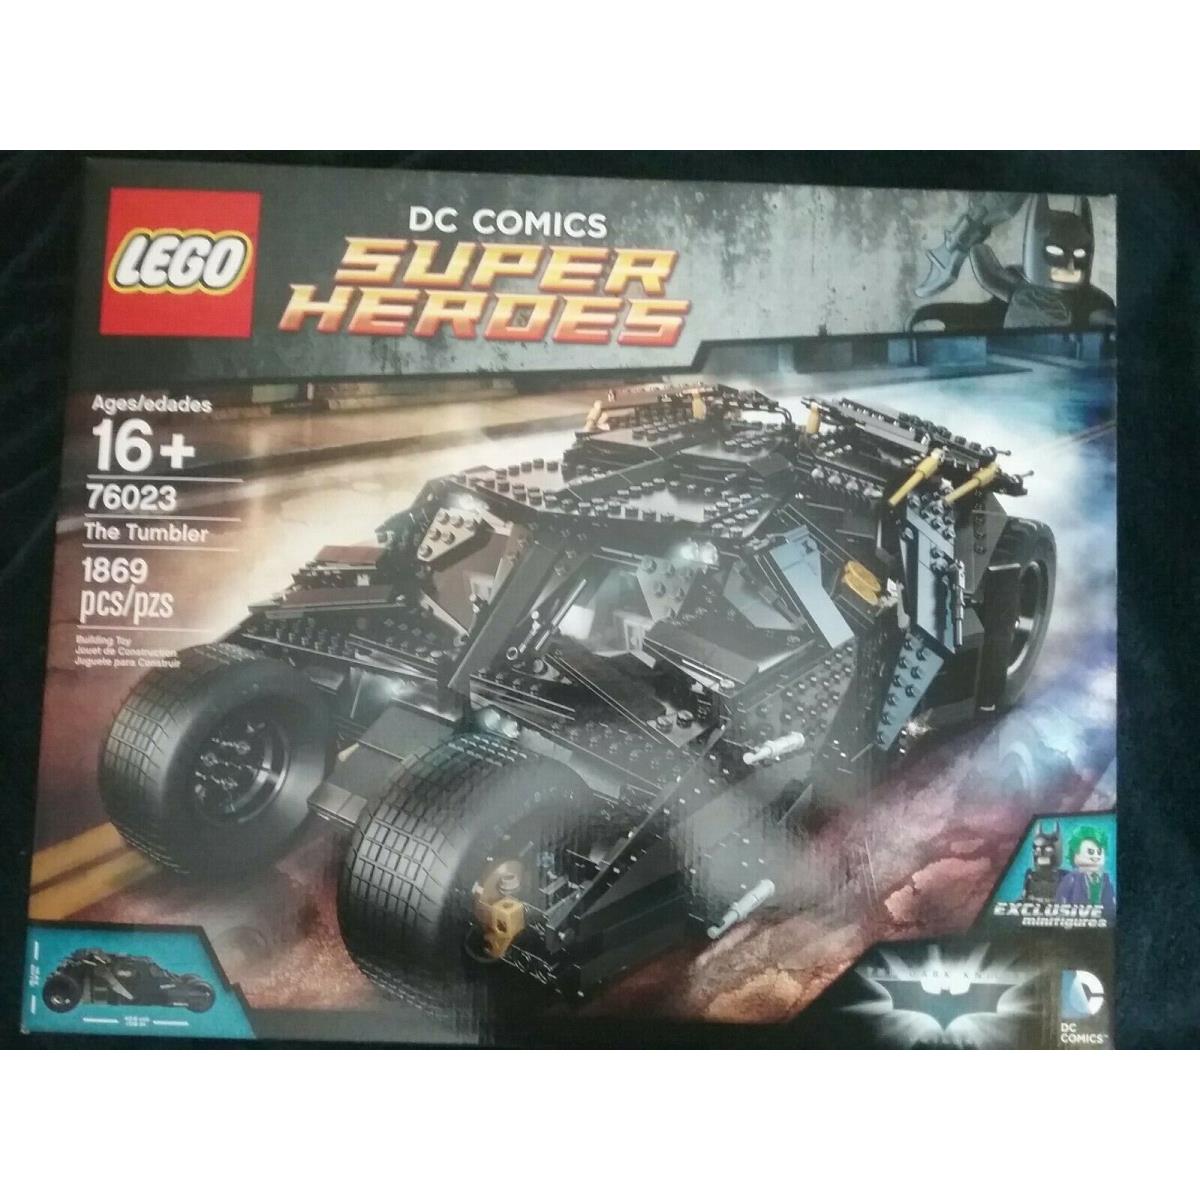 Lego DC Comics Super Heroes Tumbler 76023. Retired in Box